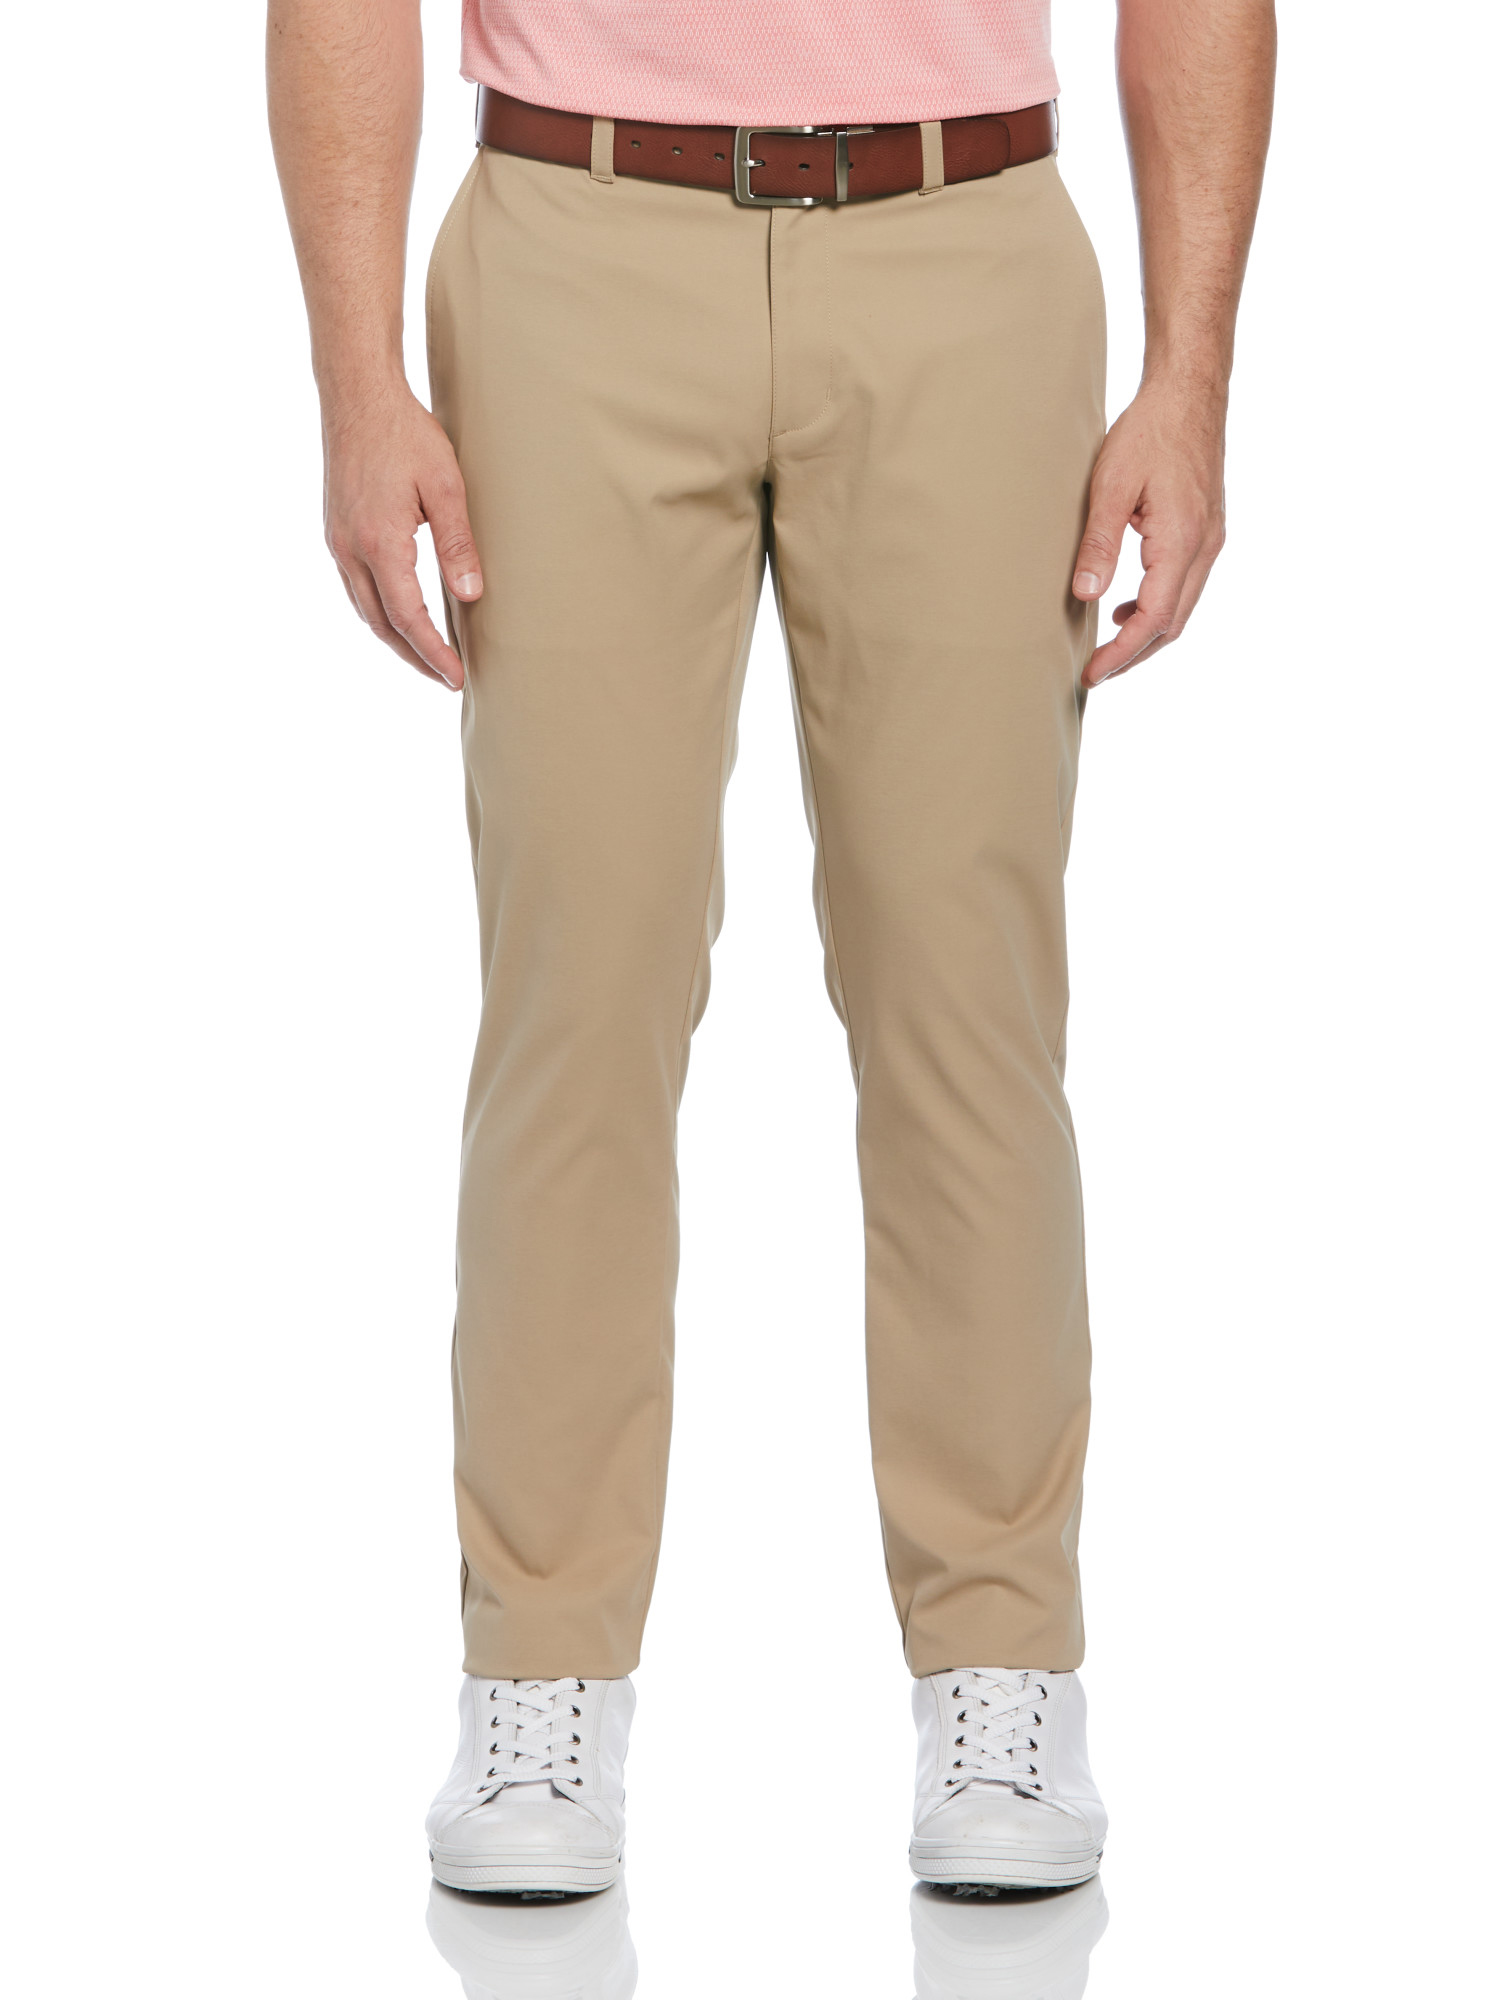 Ben Hogan Men's Flex 4-Way Stretch Golf Pants with Active Waistband, Sizes 30-50 - image 1 of 4